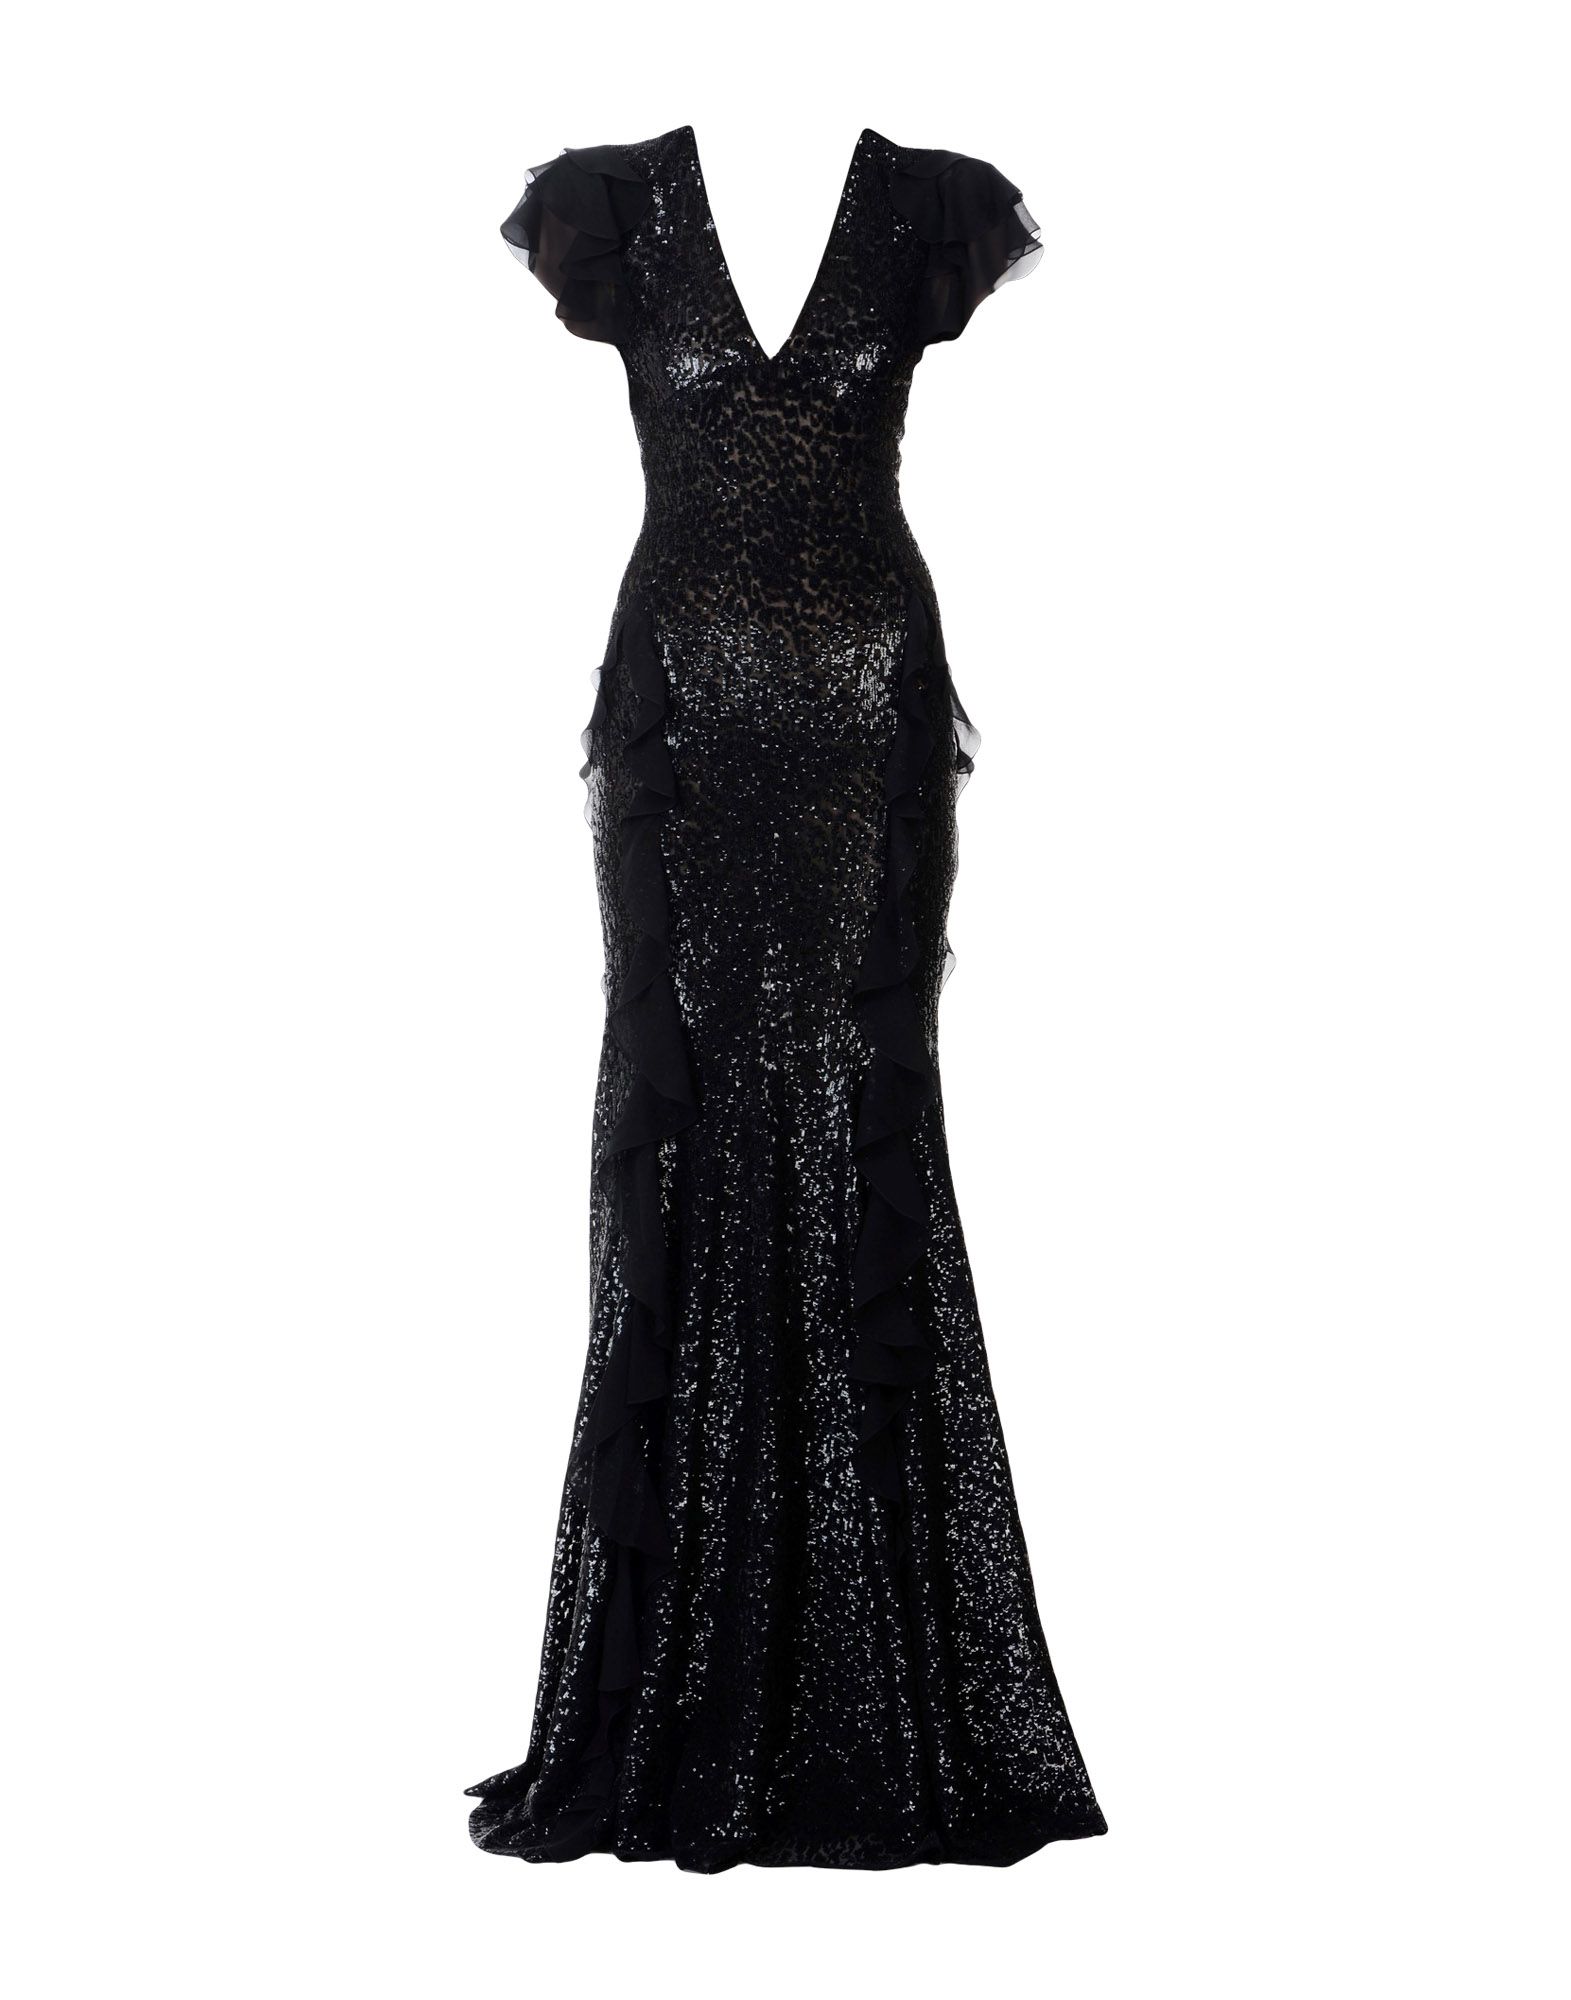 MICHAEL KORS Long dress,34839093DR 2